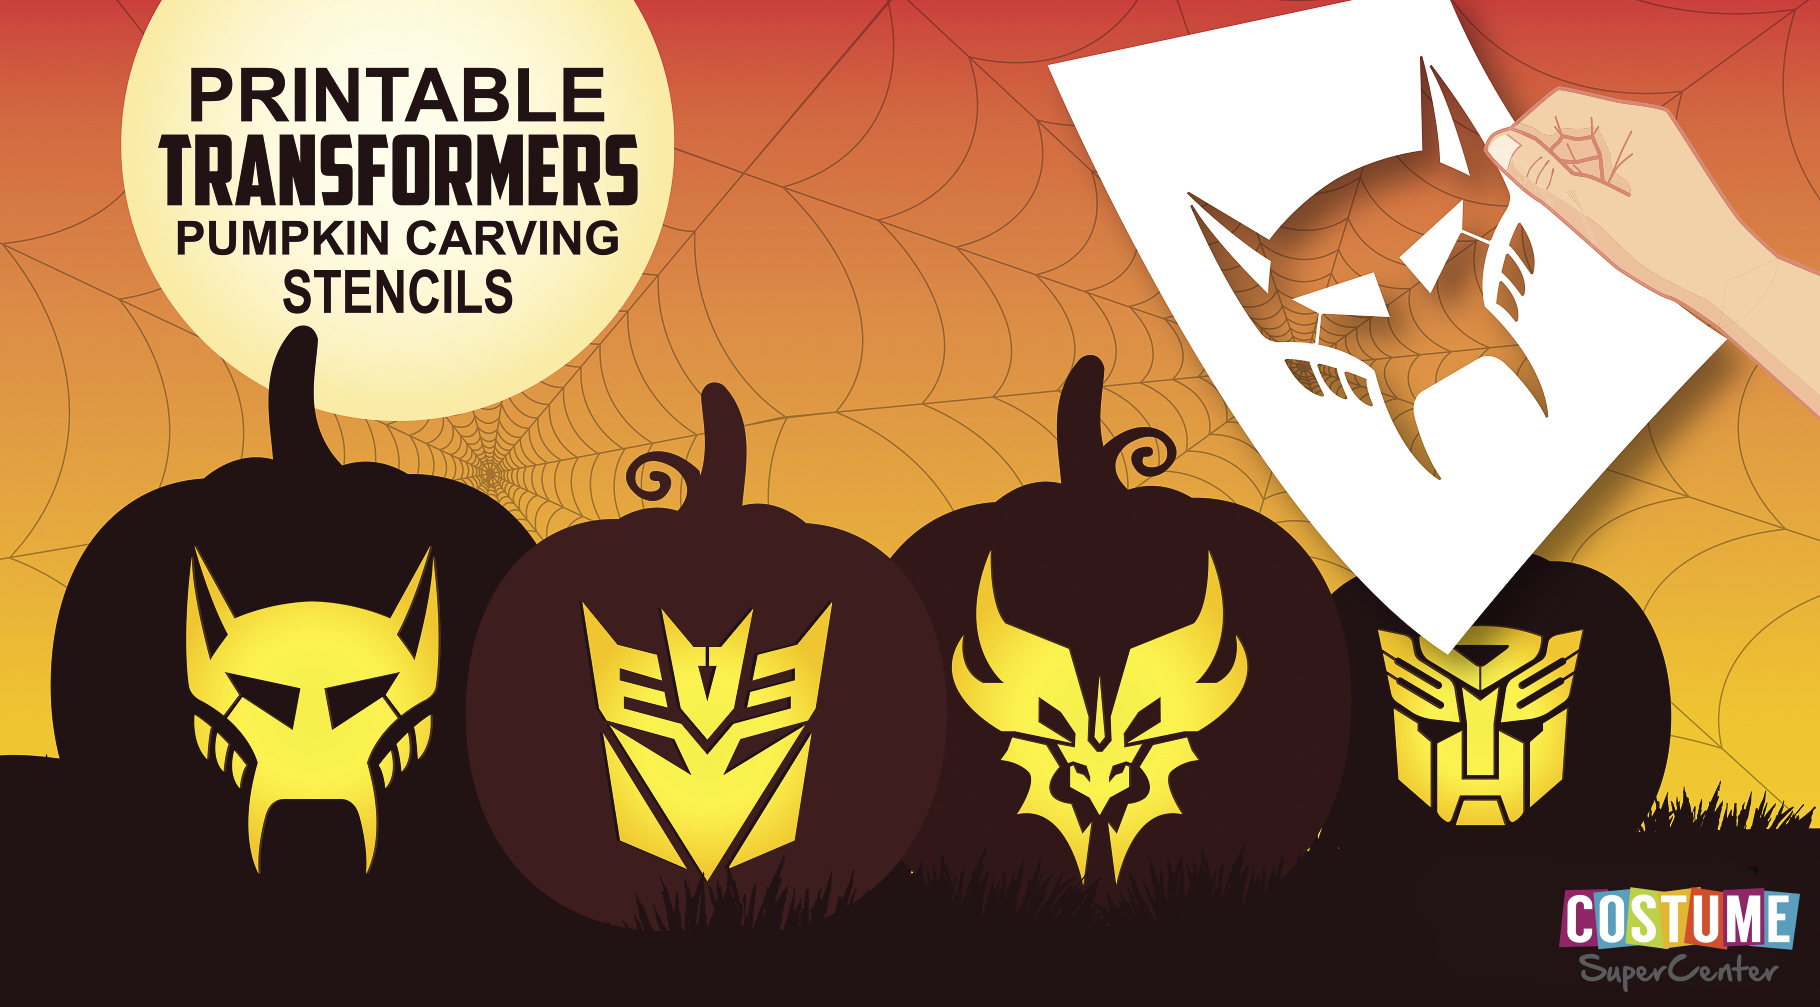 Free Transformer Pumpkin Carving Stencils | Costume Supercenter Blog - Free Printable Pumpkin Carving Stencils